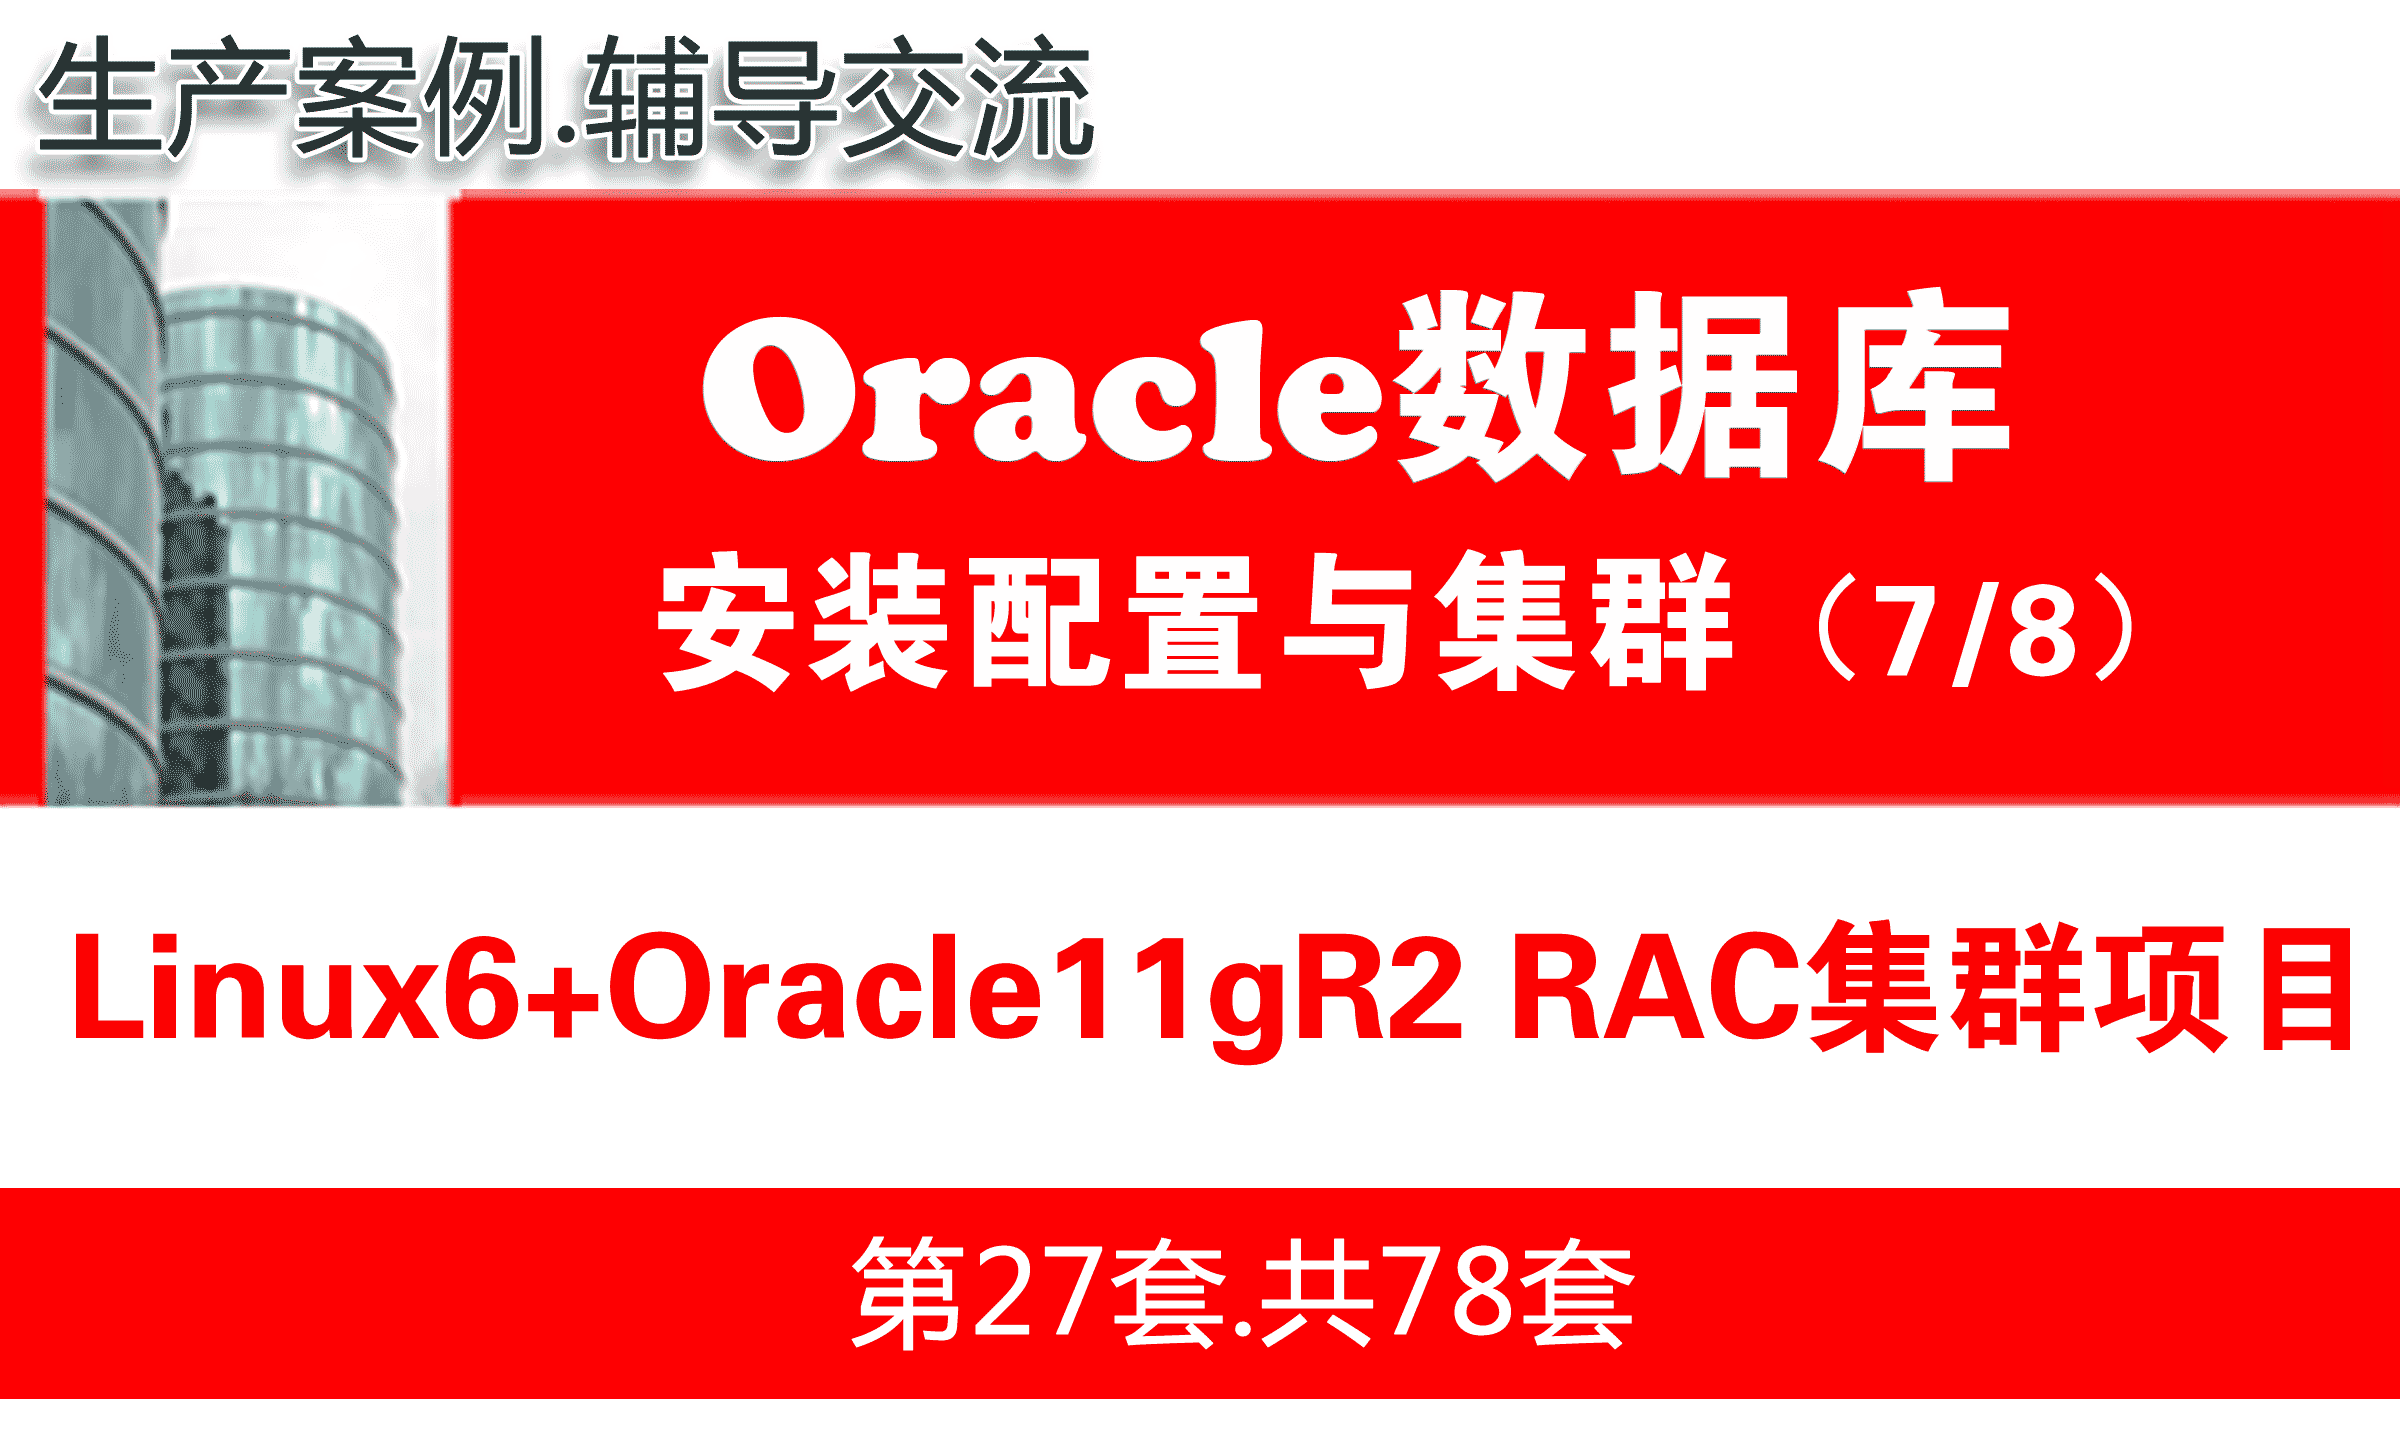 Linux生产环境Oracle RAC集群安装配置与维护_Oracle 11gR2 RAC培训教程6